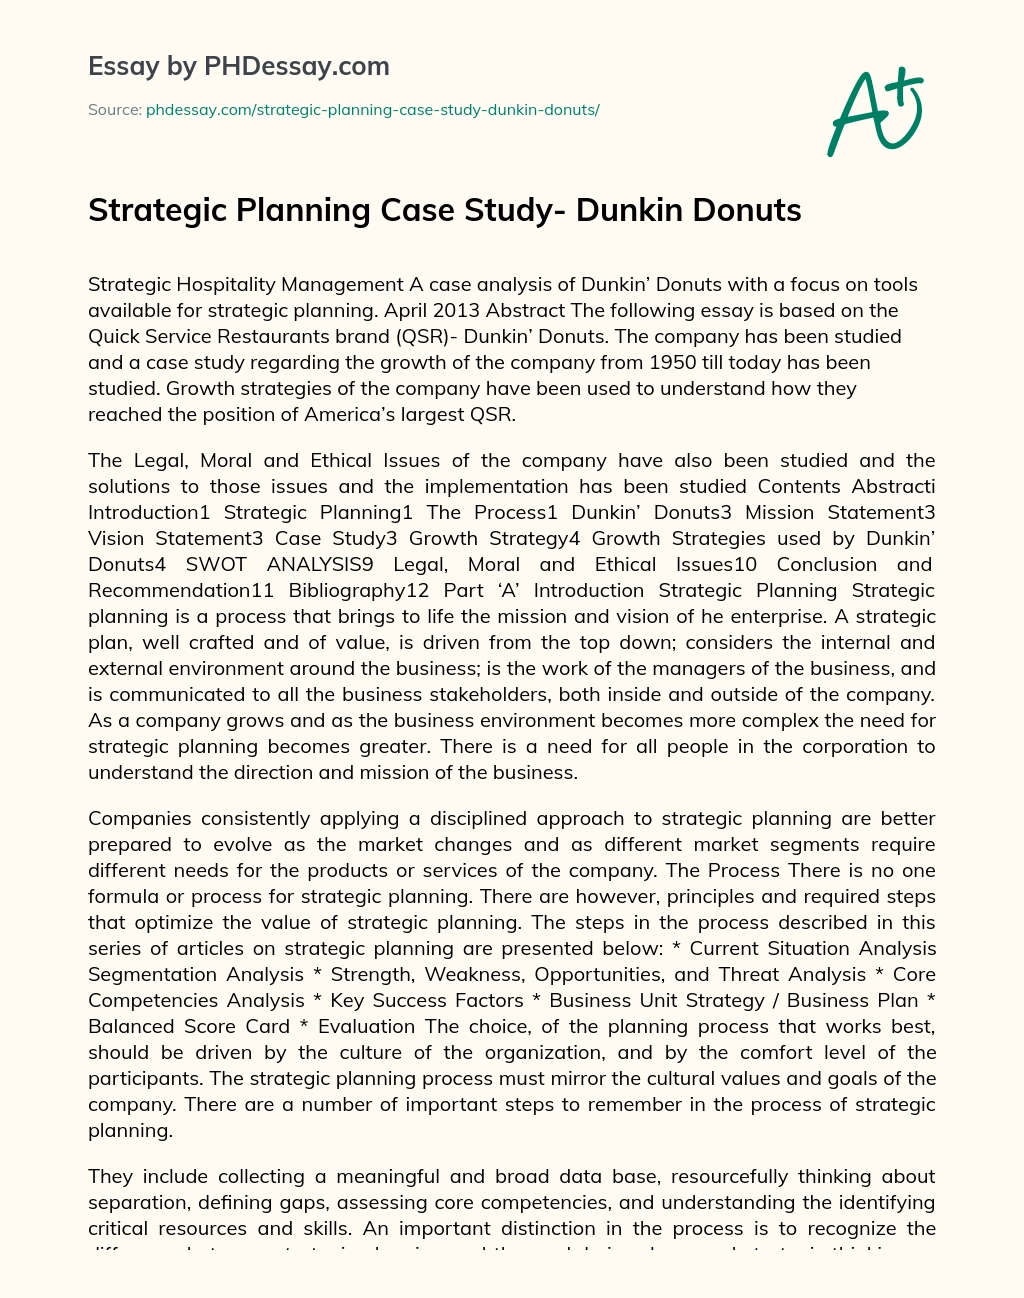 Strategic Planning Case Study- Dunkin Donuts essay